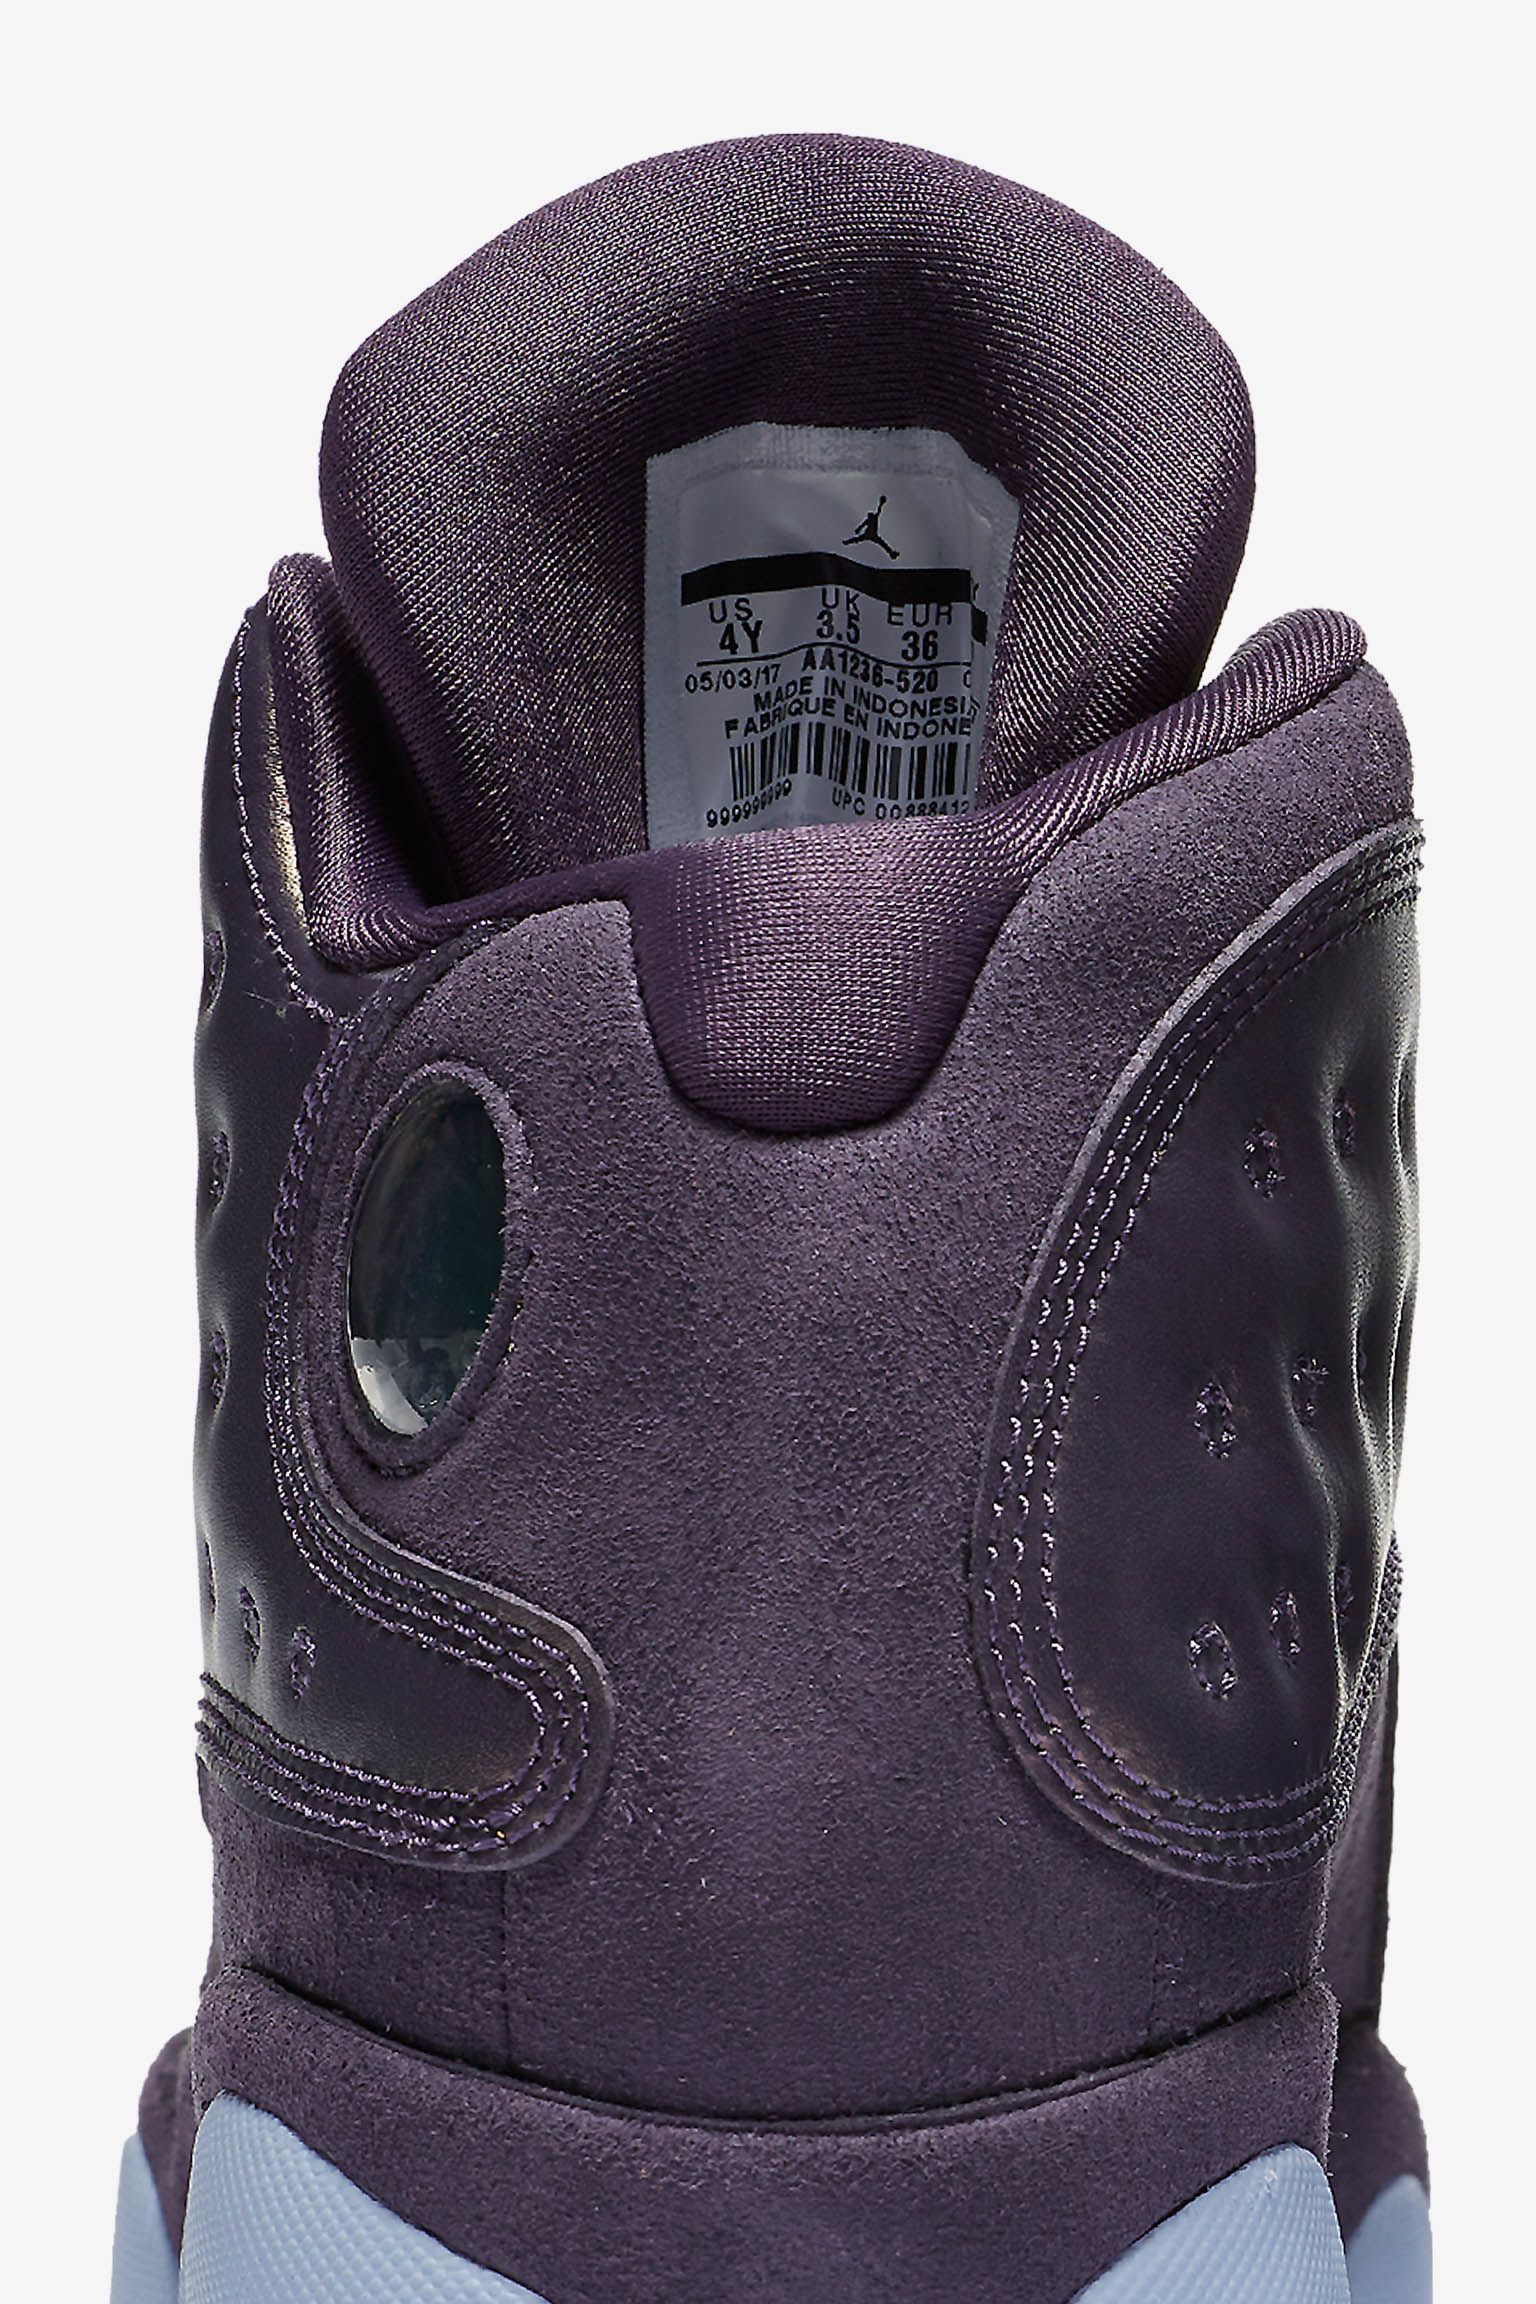 Air Jordan 13 Gg Heiress Dark Raisin Hydrogen Blue Release Date Nike Snkrs